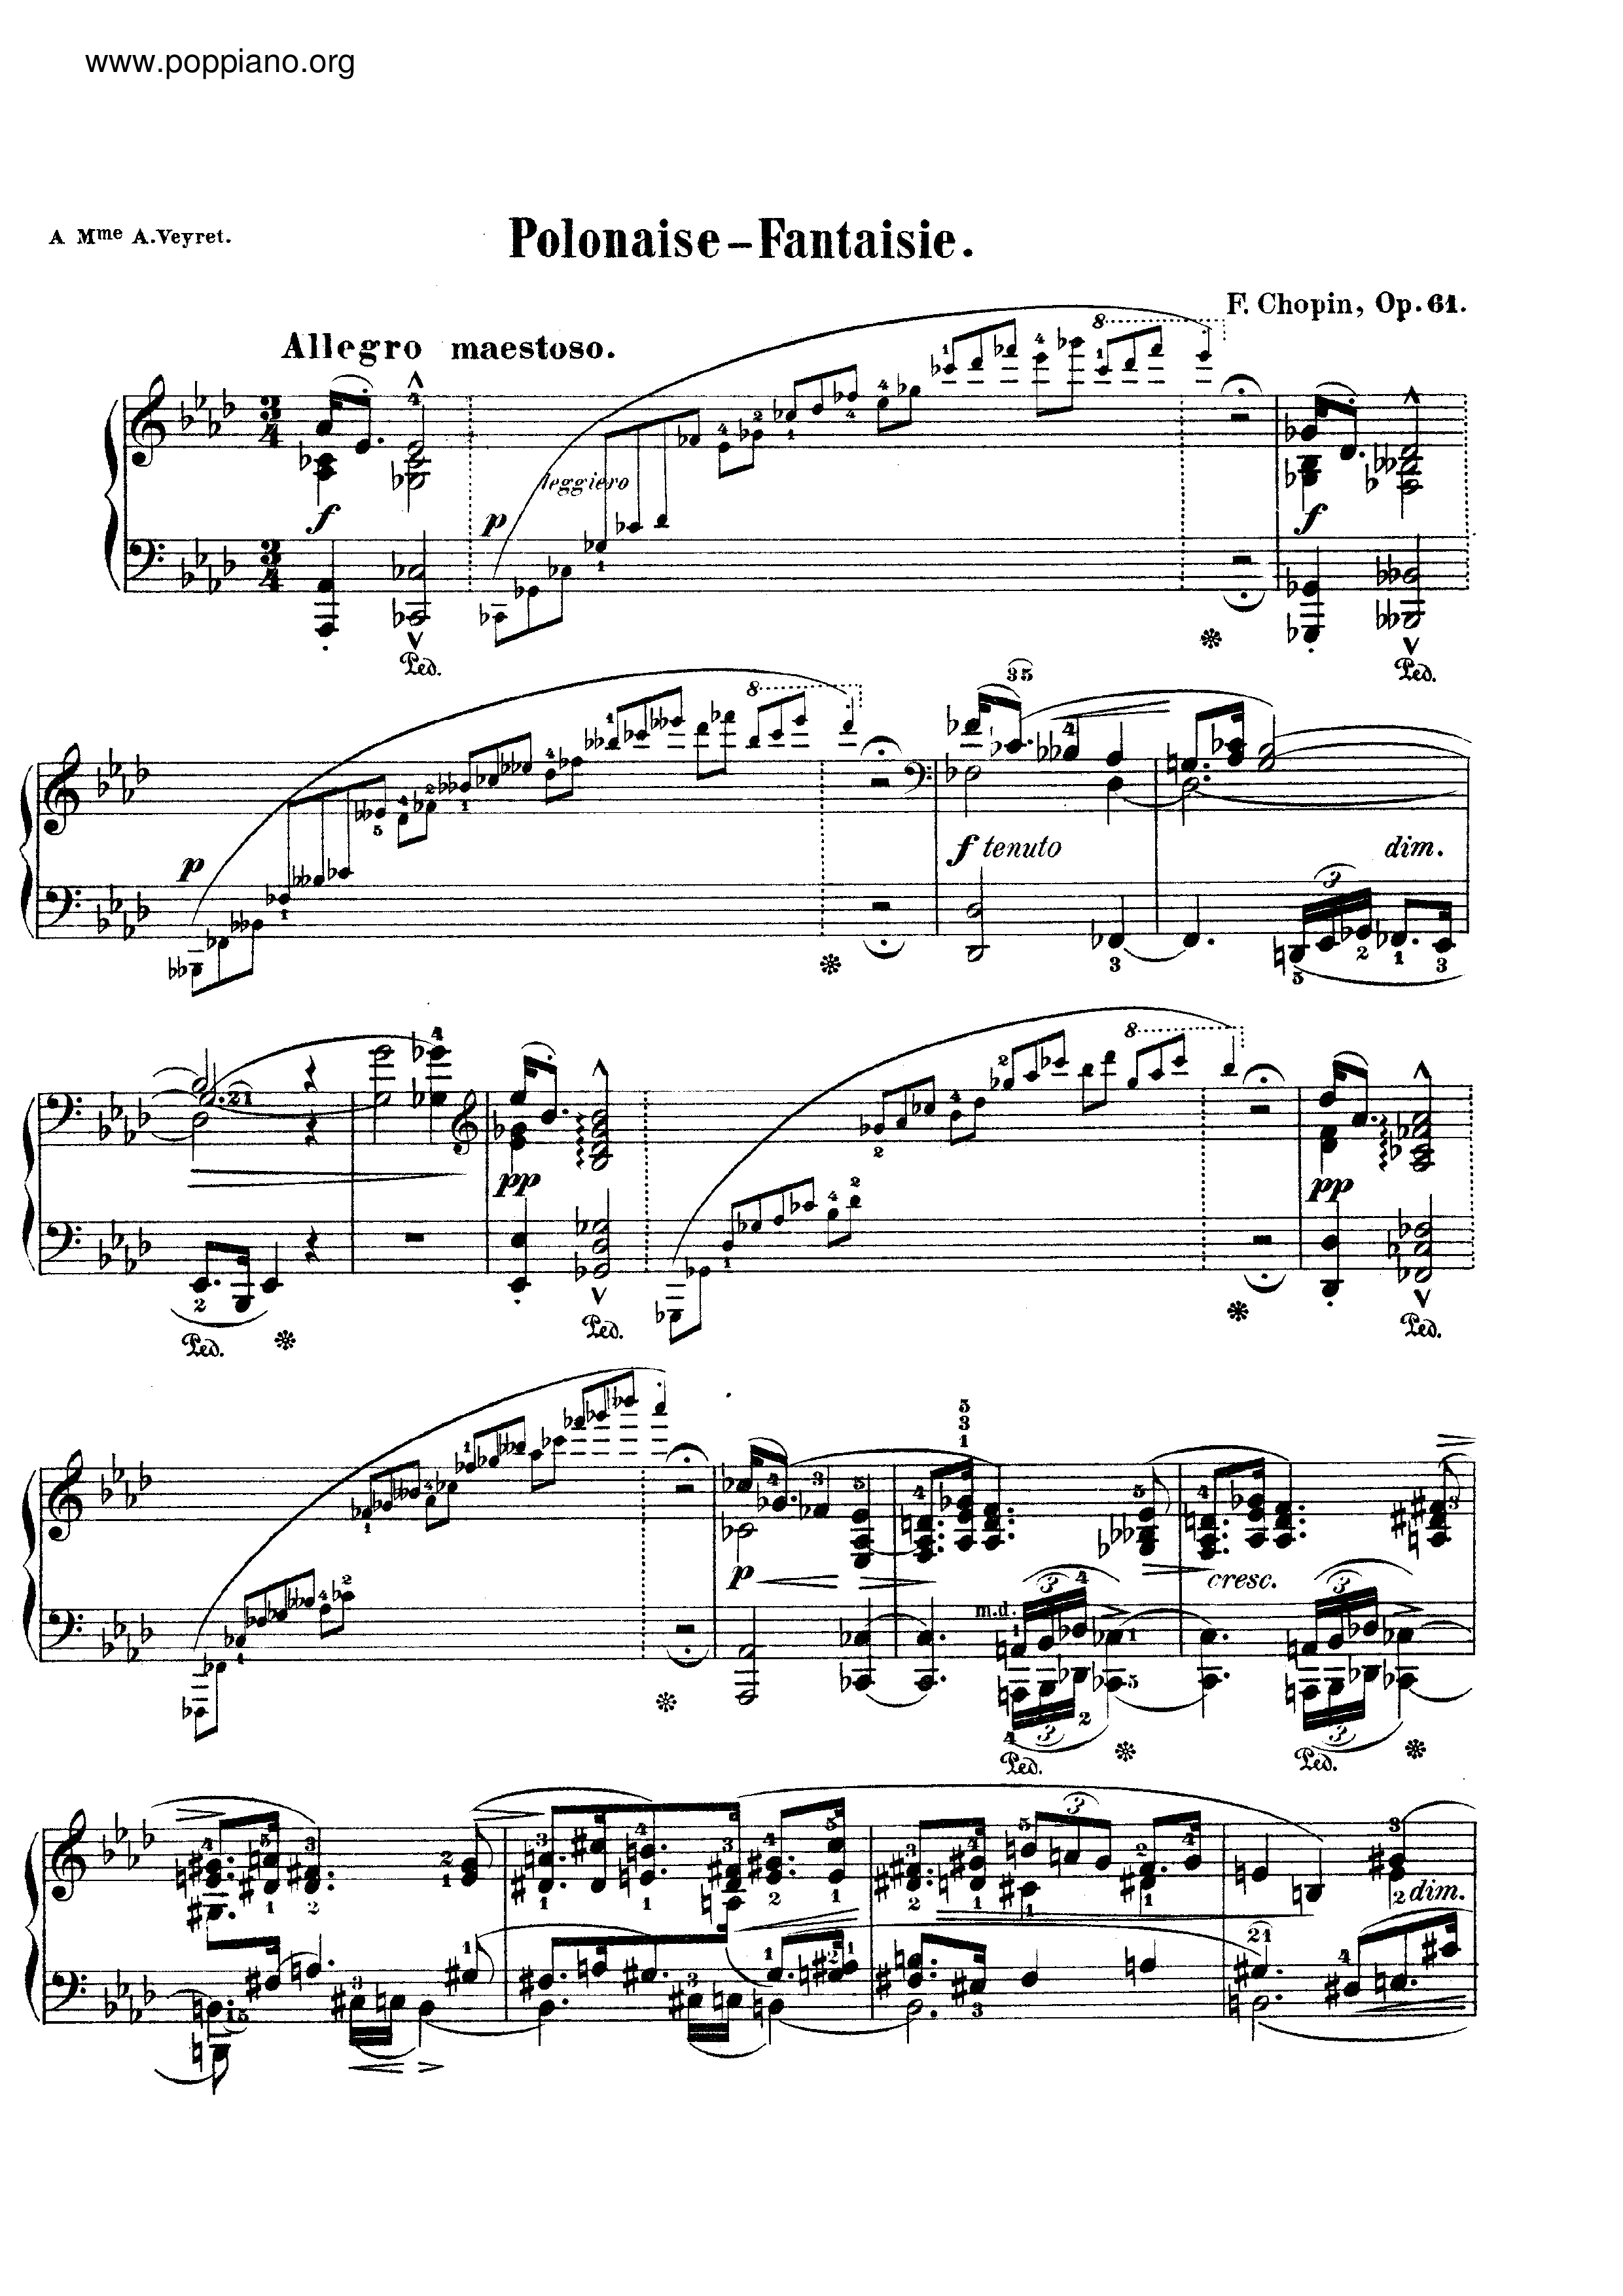 Polonaise fantasie, Op. 61 Score